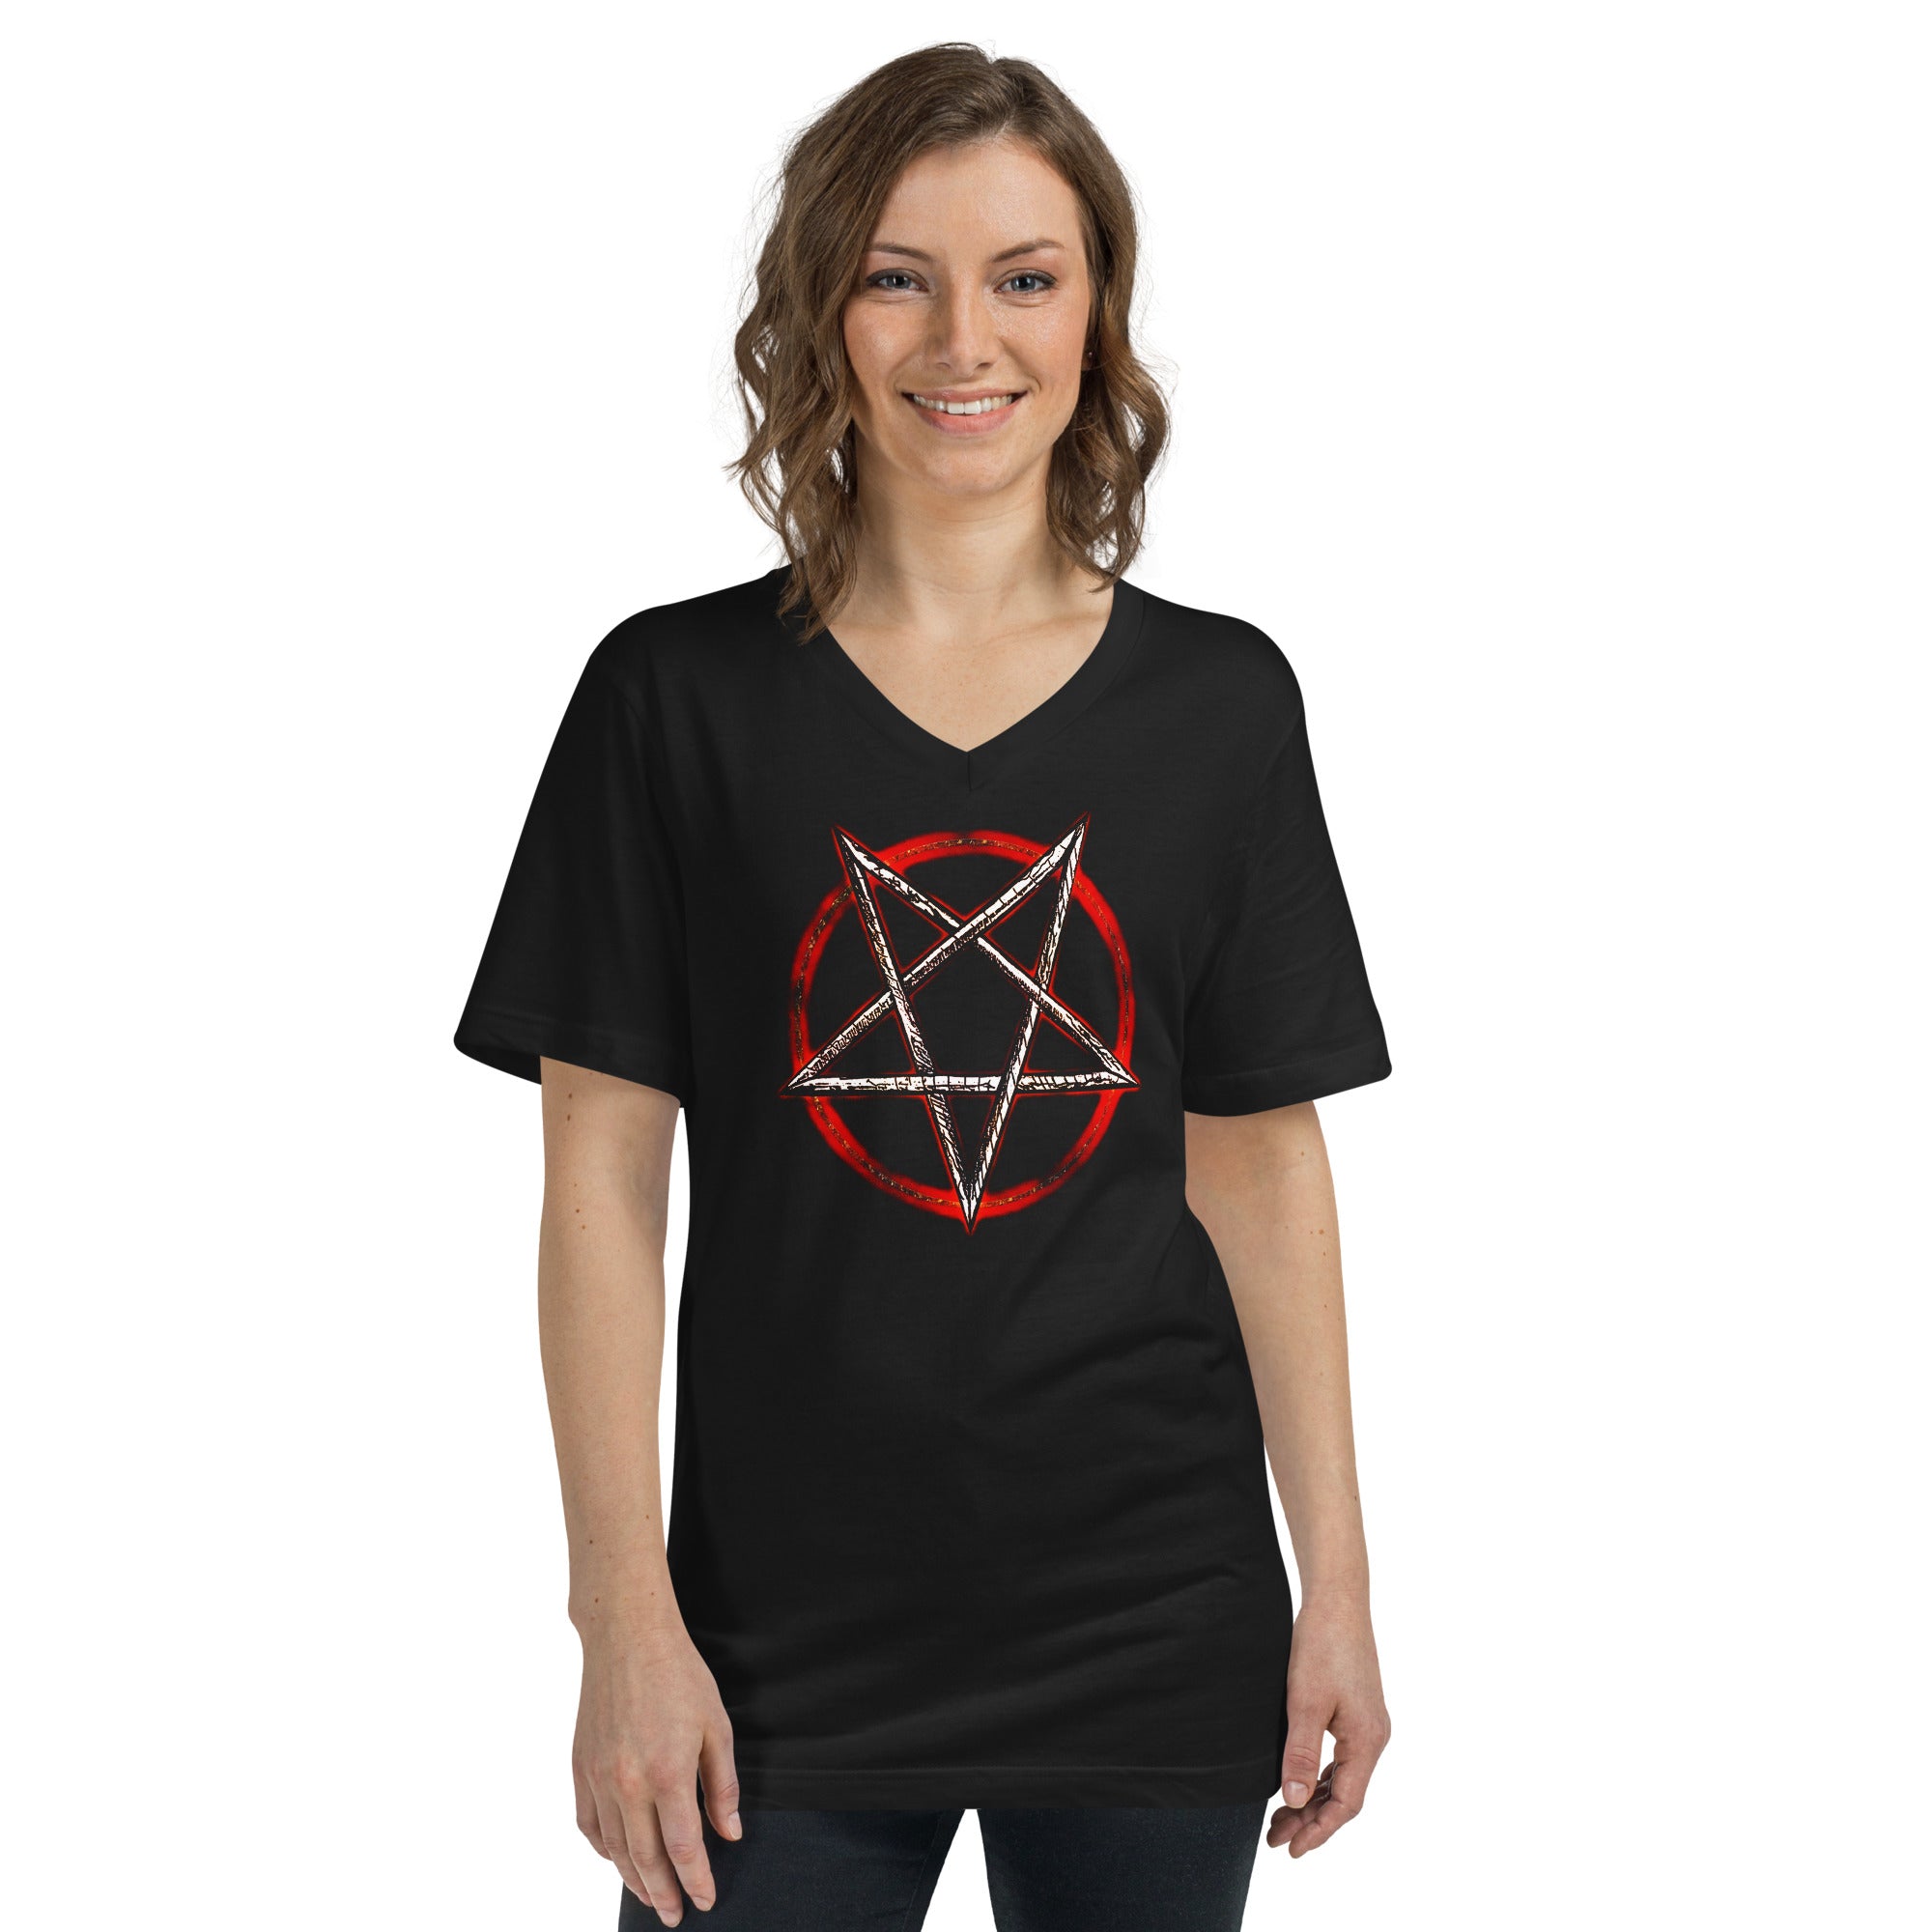 Fire and Brimstone Inverted Pentagram Unholy Women’s Short Sleeve V-Neck T-Shirt - Edge of Life Designs